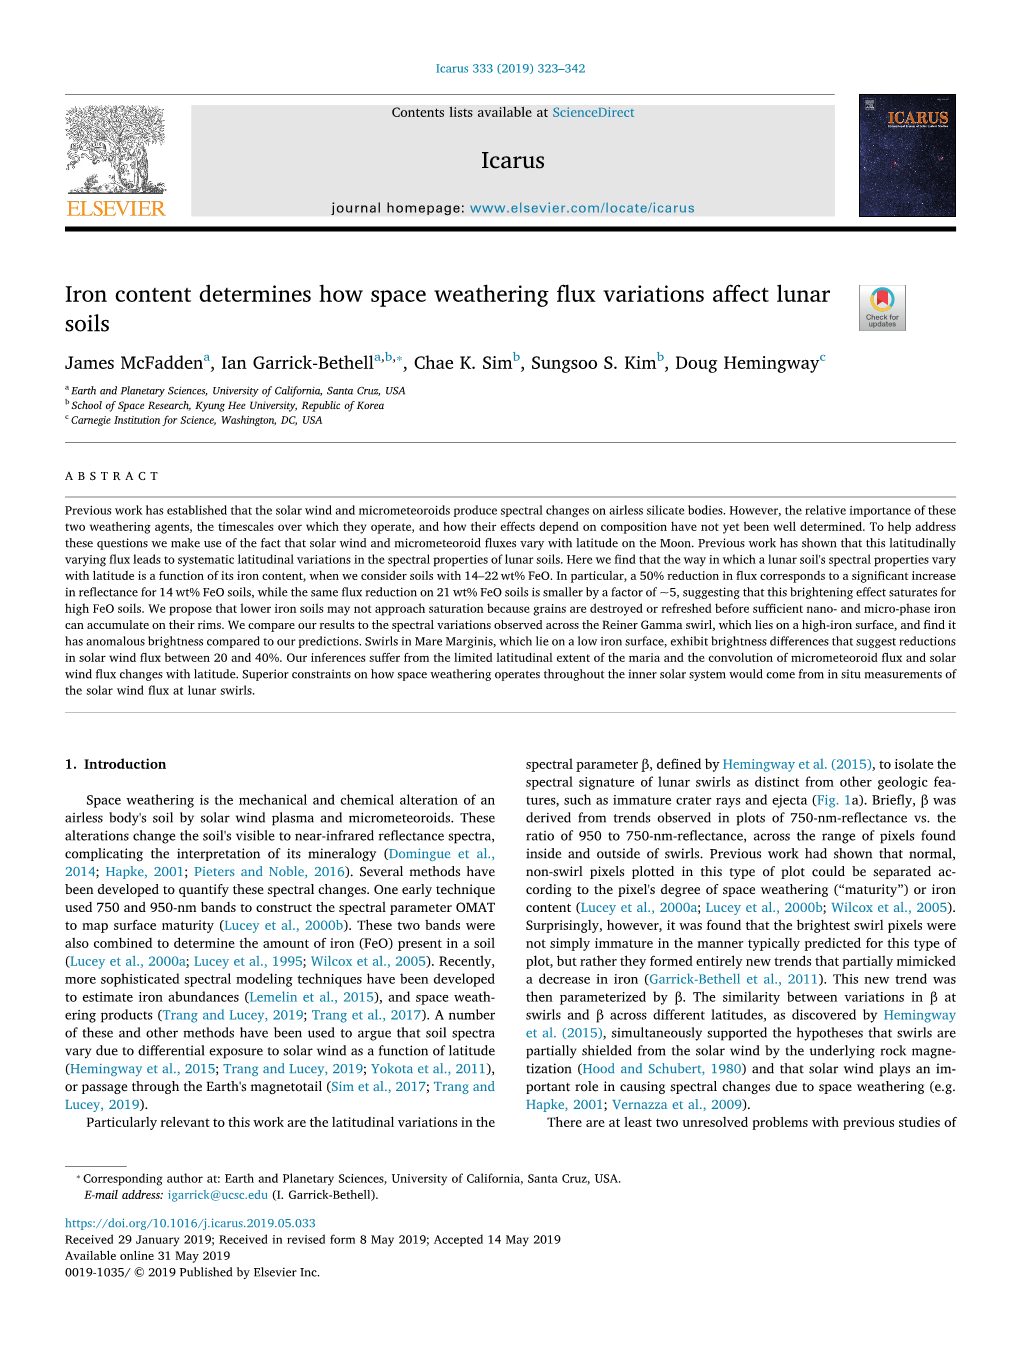 Iron Content Determines How Space Weathering Flux Variations Affect Lunar T Soils ⁎ James Mcfaddena, Ian Garrick-Bethella,B, , Chae K